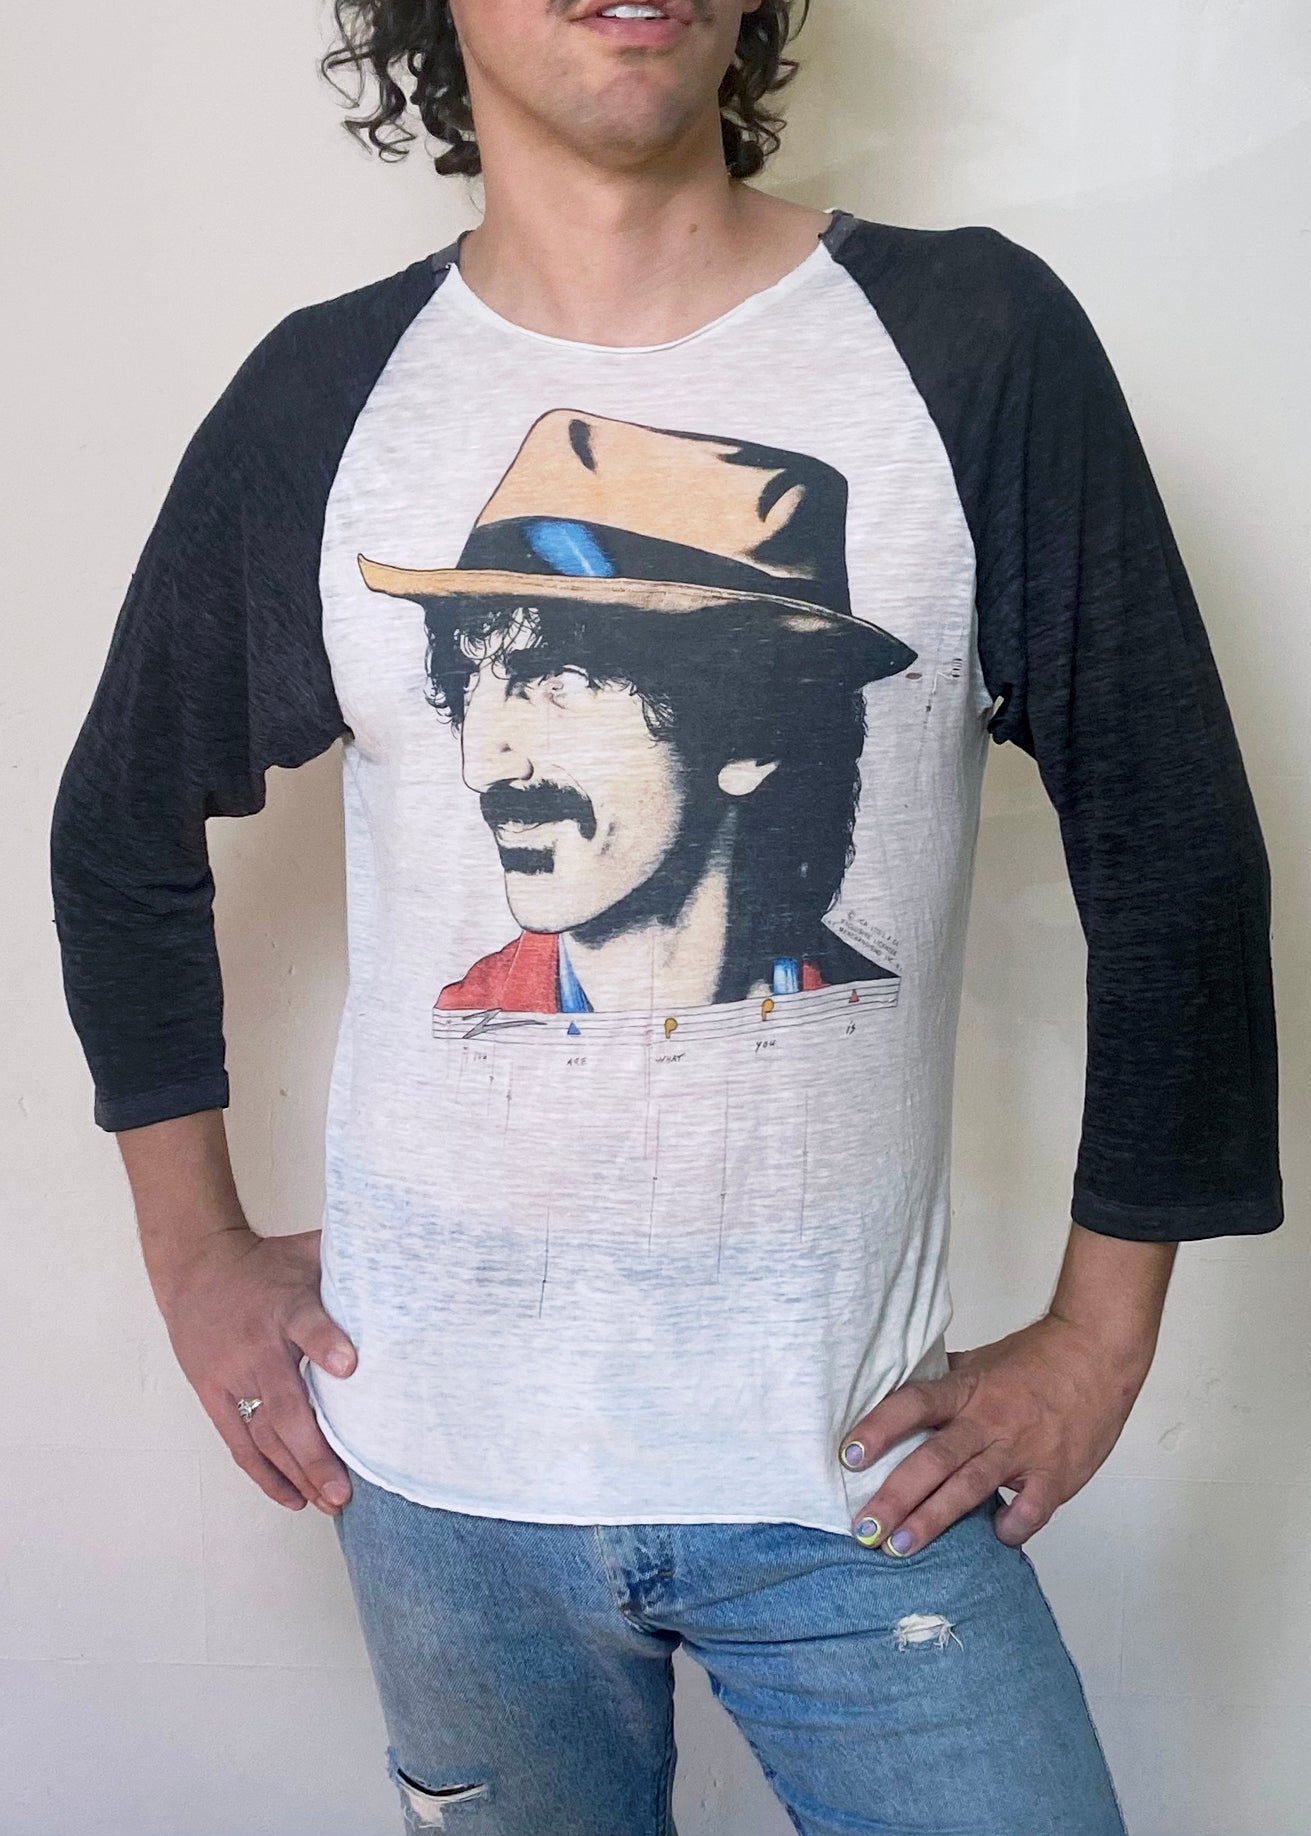 Frank Zappa (1981)